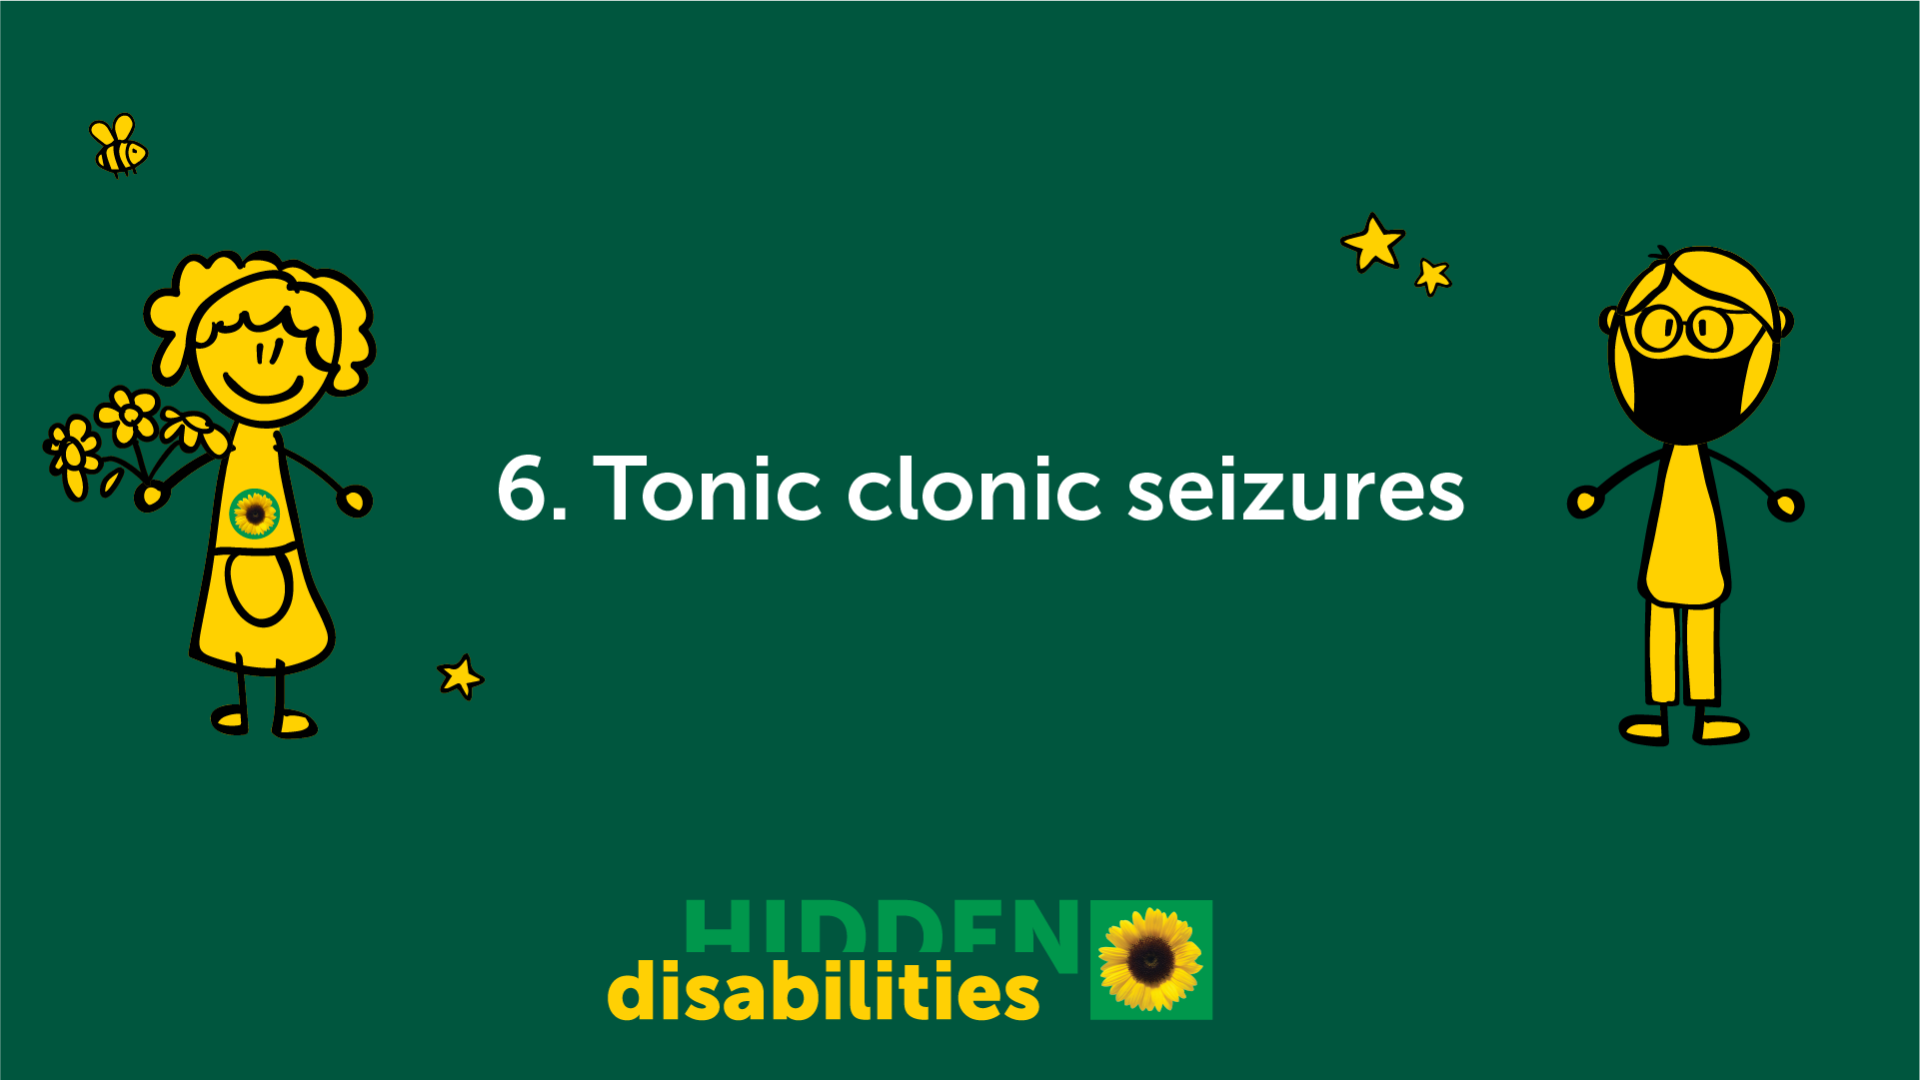 Tonic clonic seizures